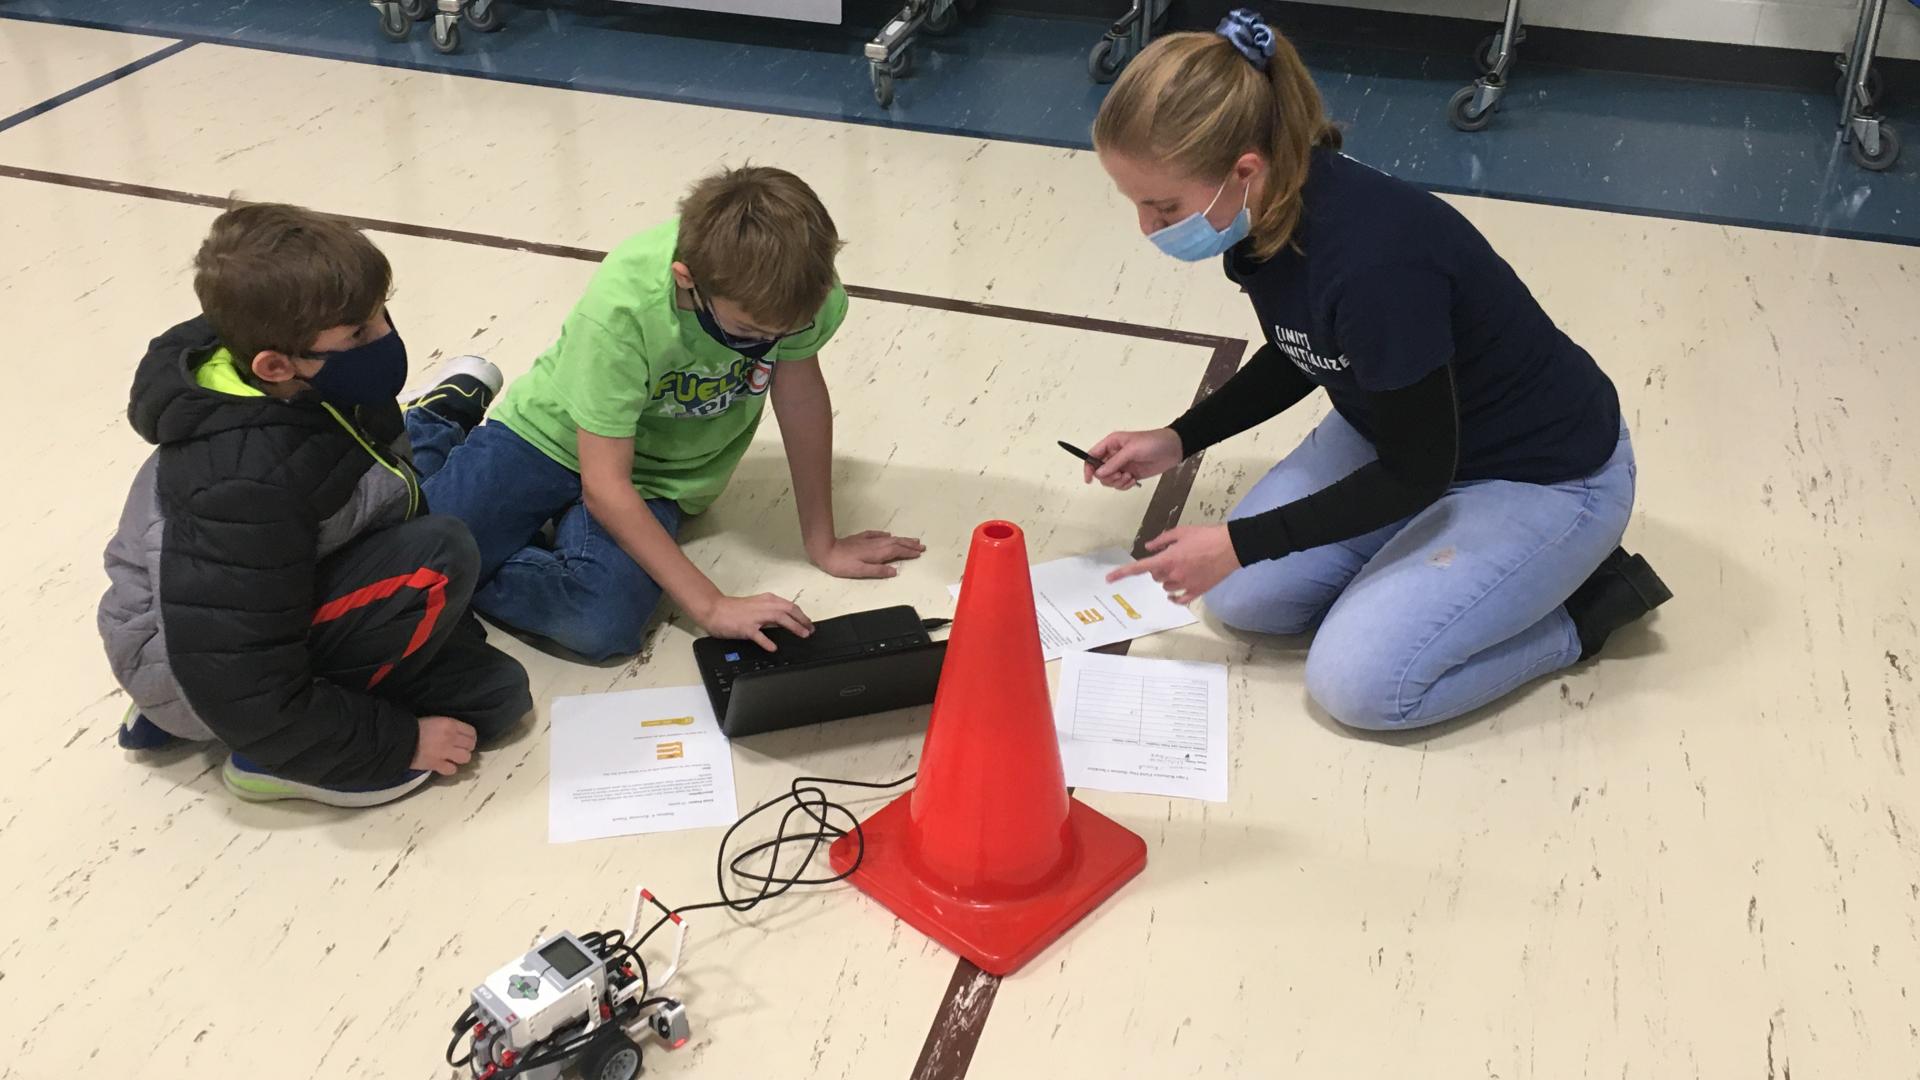 School of Computing students bring robotics to Lincoln elementary schools